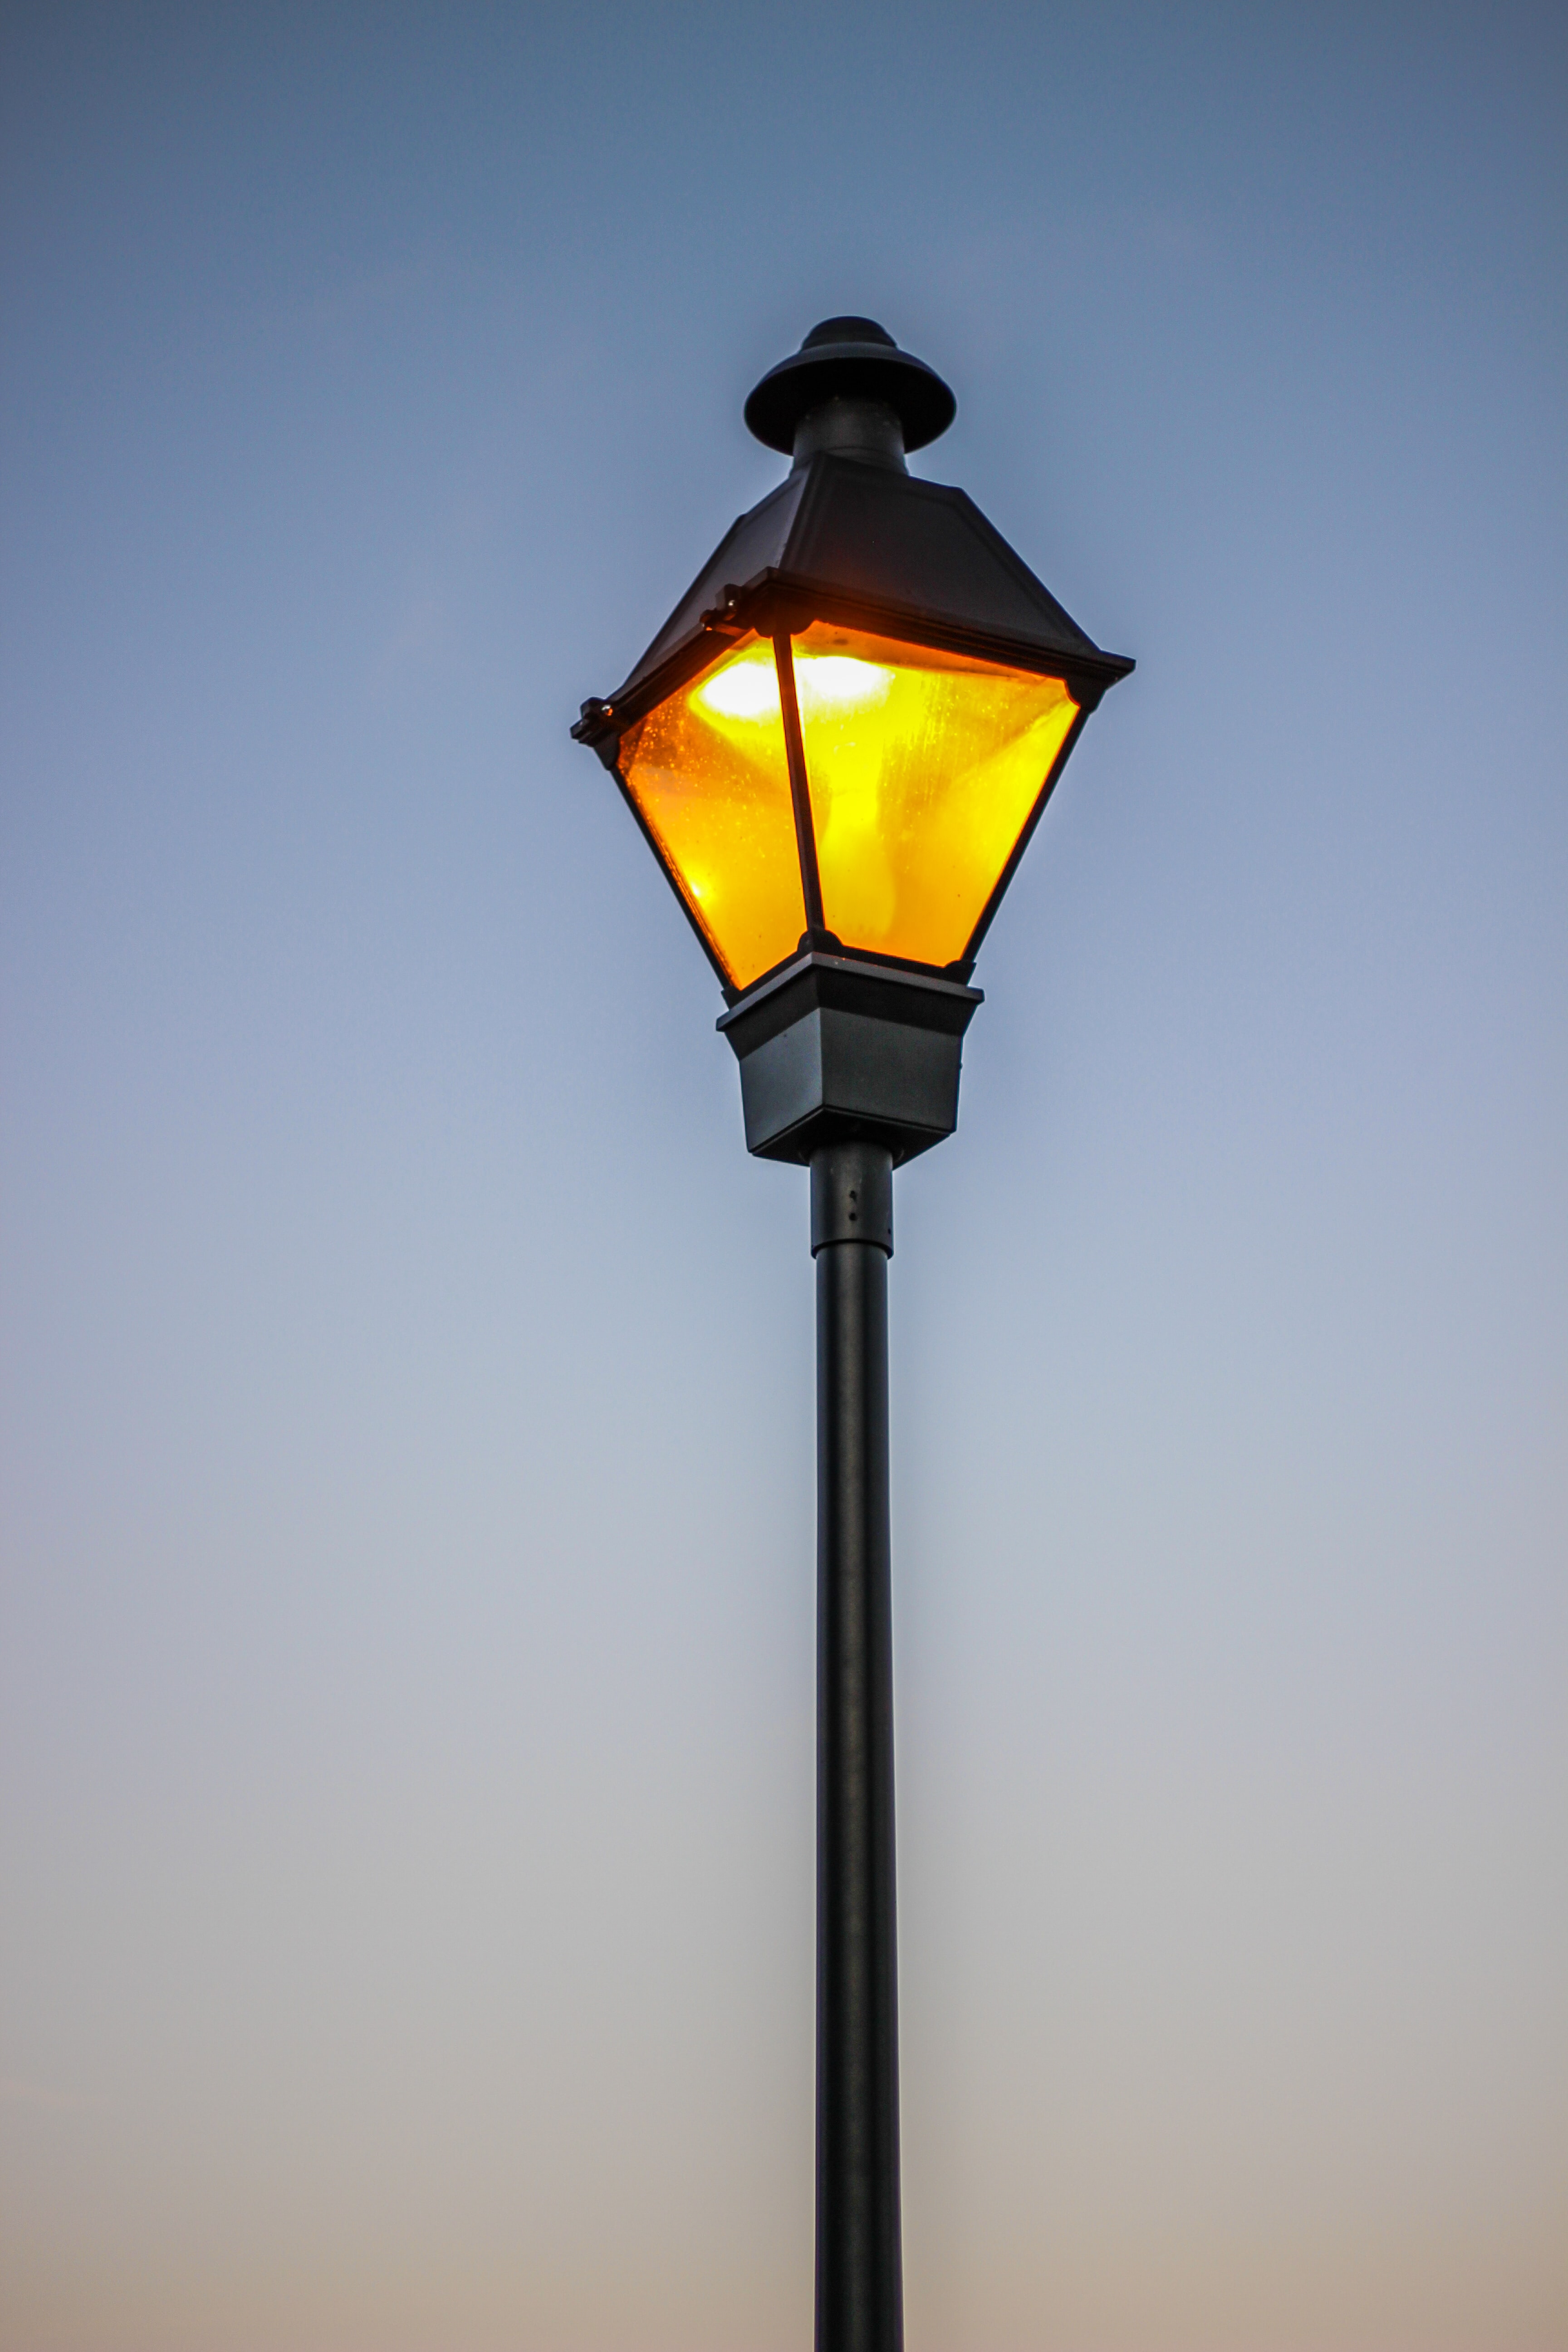 Light pole; image by Chris Knight, via Unsplash.com.